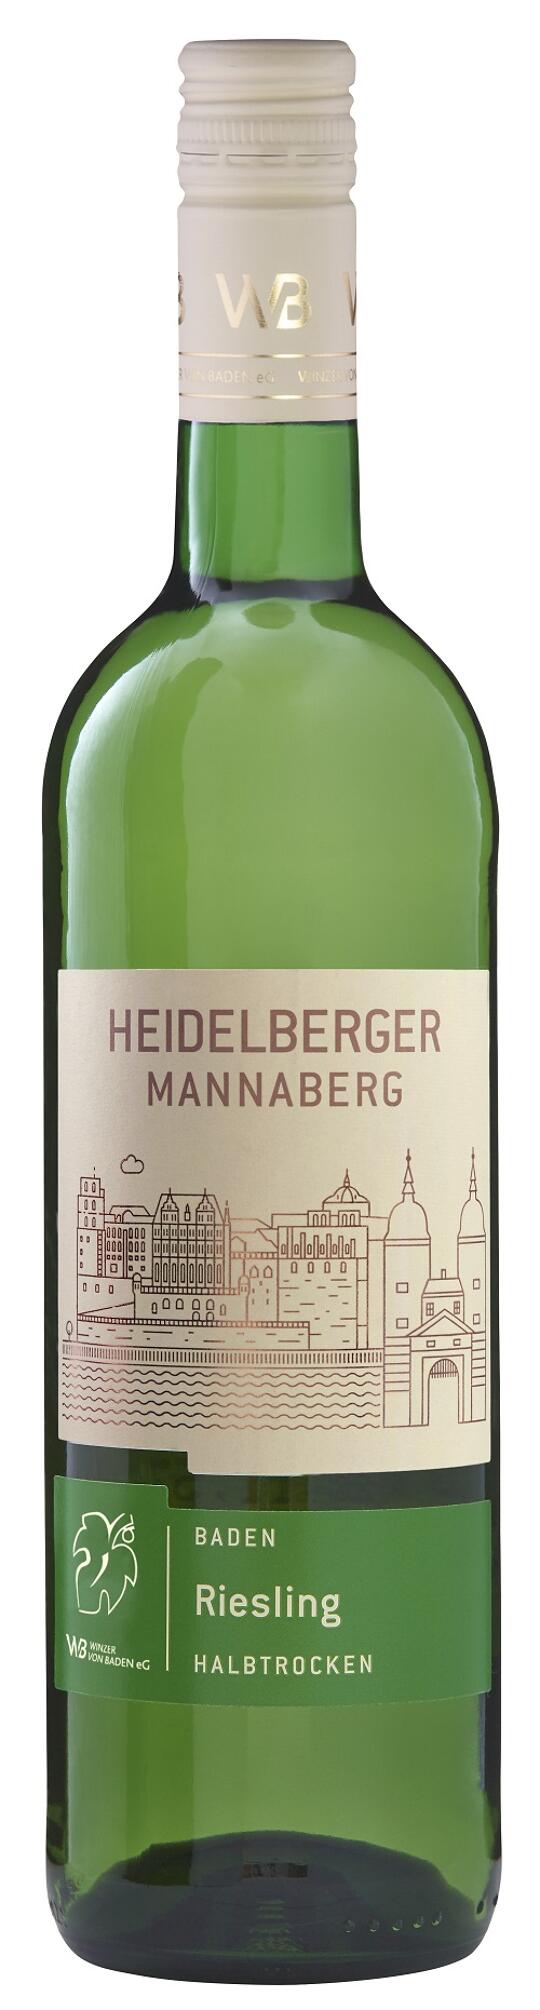 Heidelberger Mannaberg Riesling halbtrocken 2021